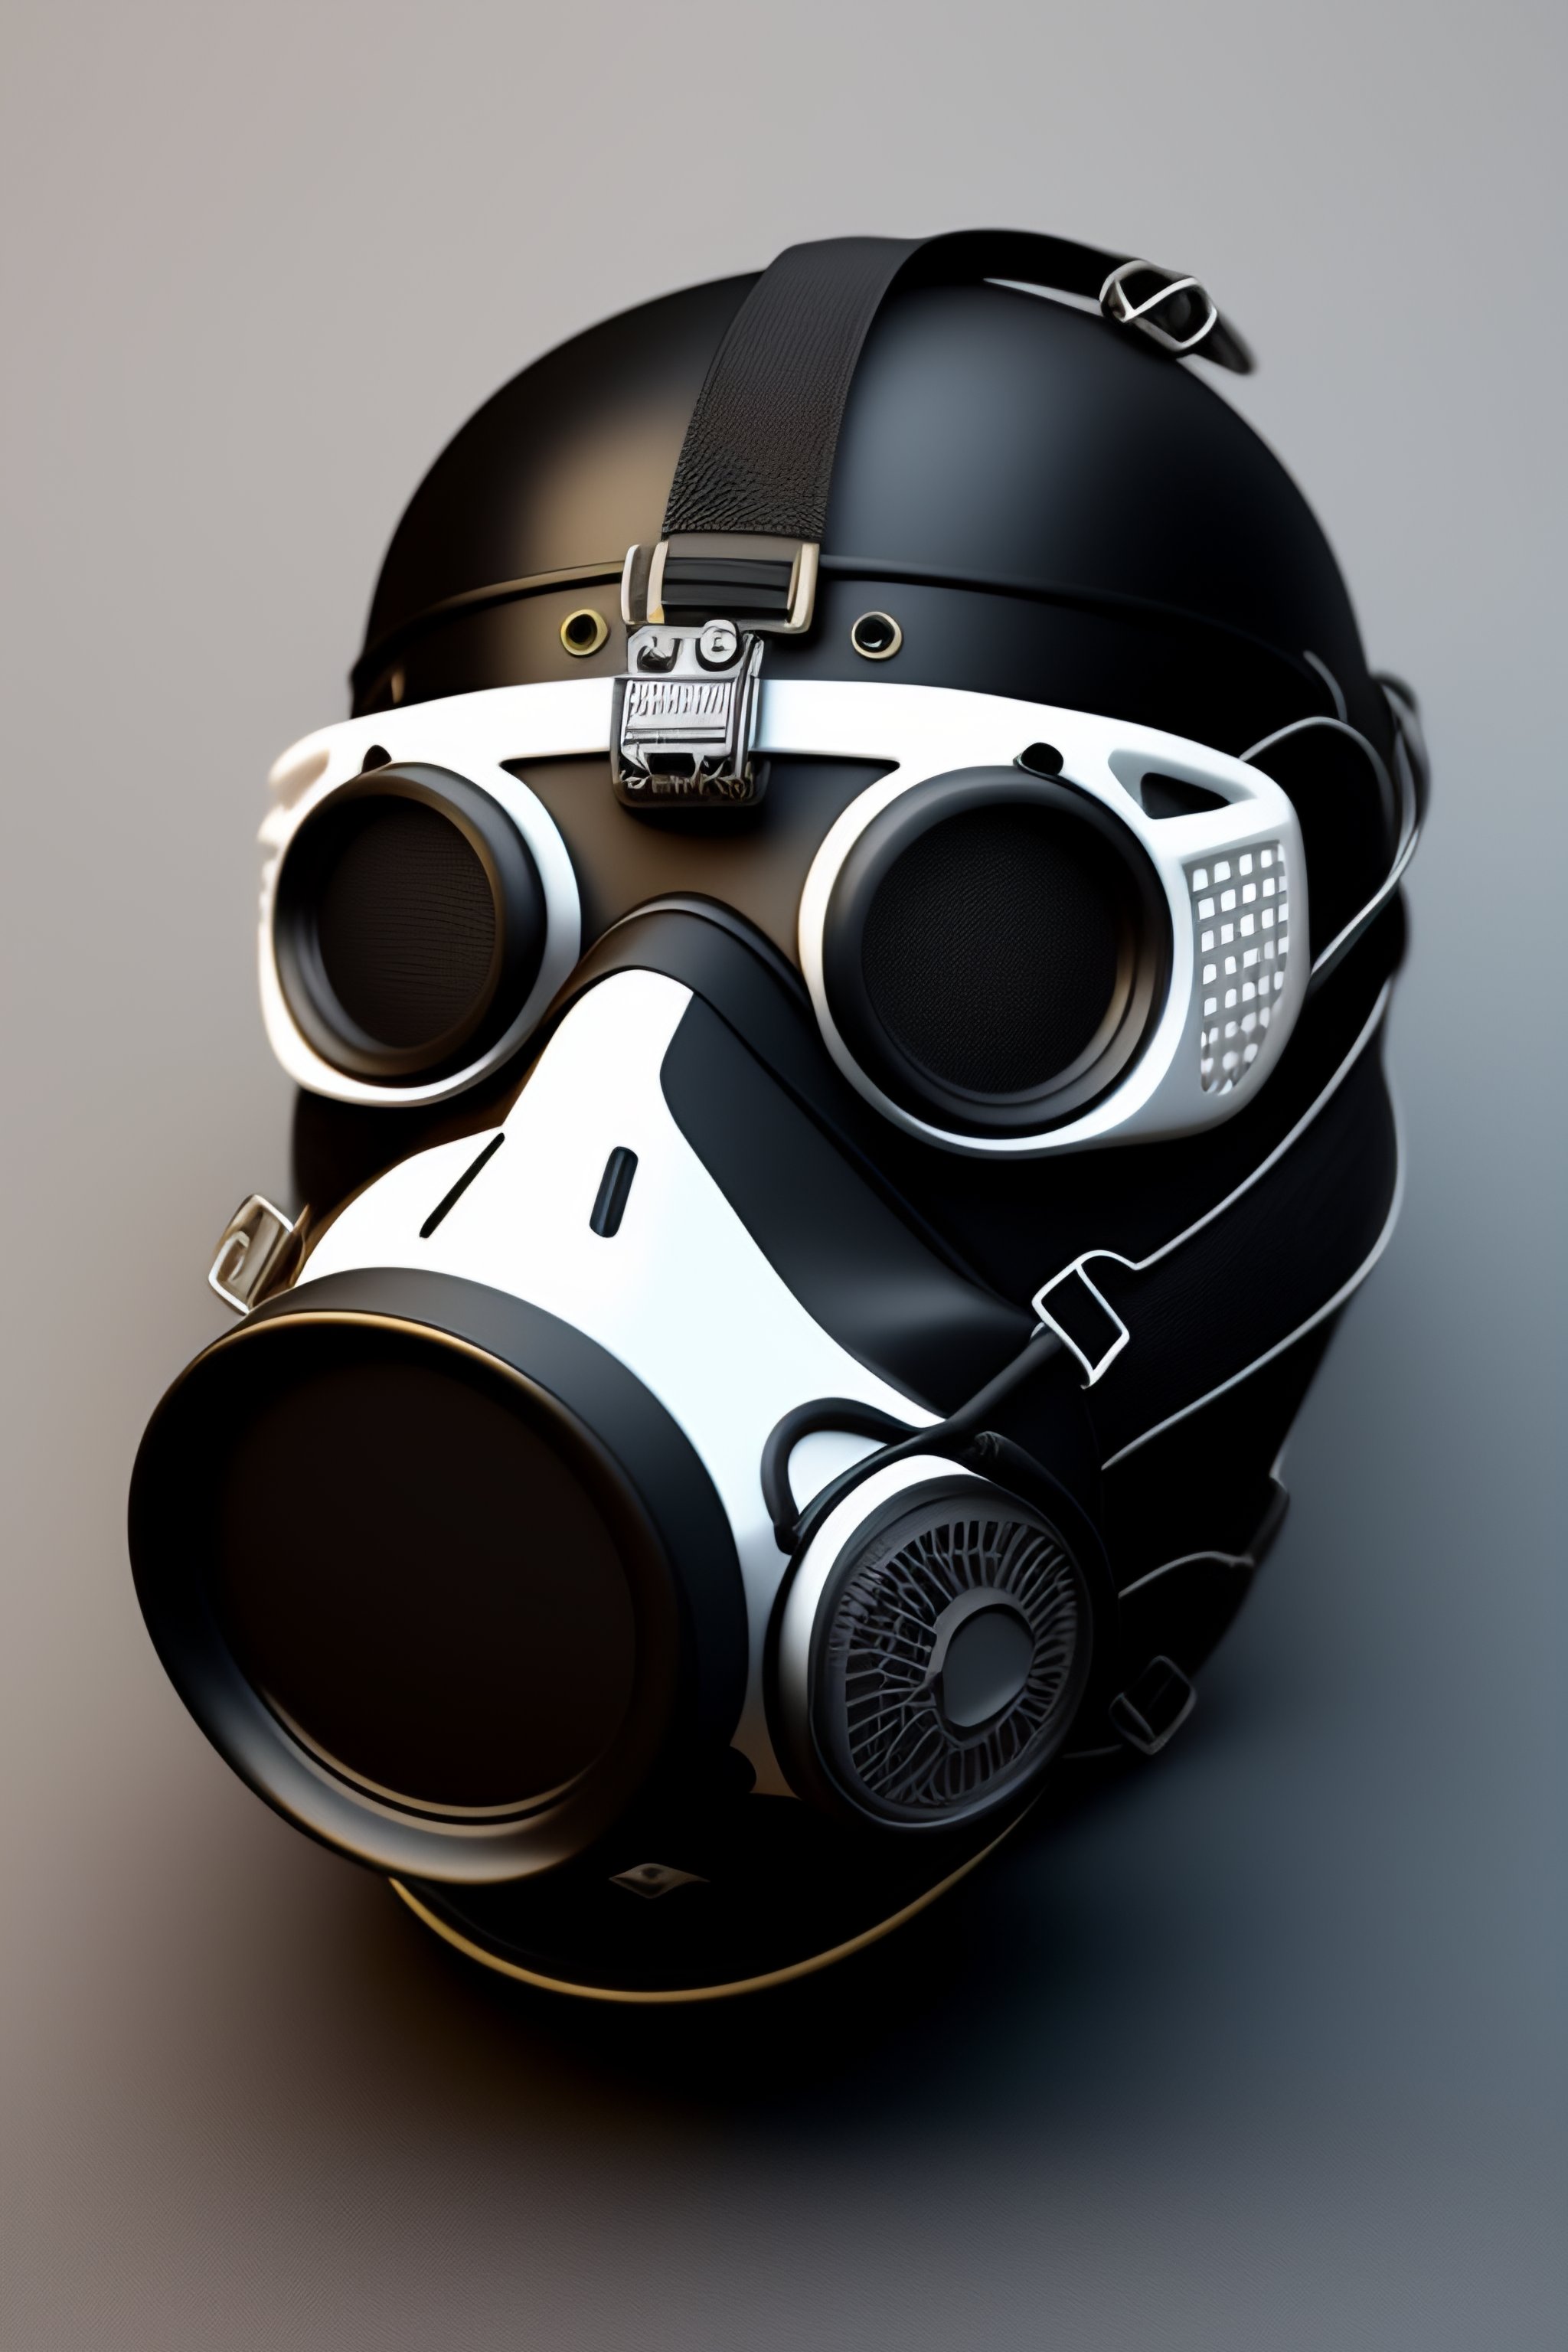 Lexica Cyberpunk Gas Mask White And Black Intricate Details Gaudi 1598